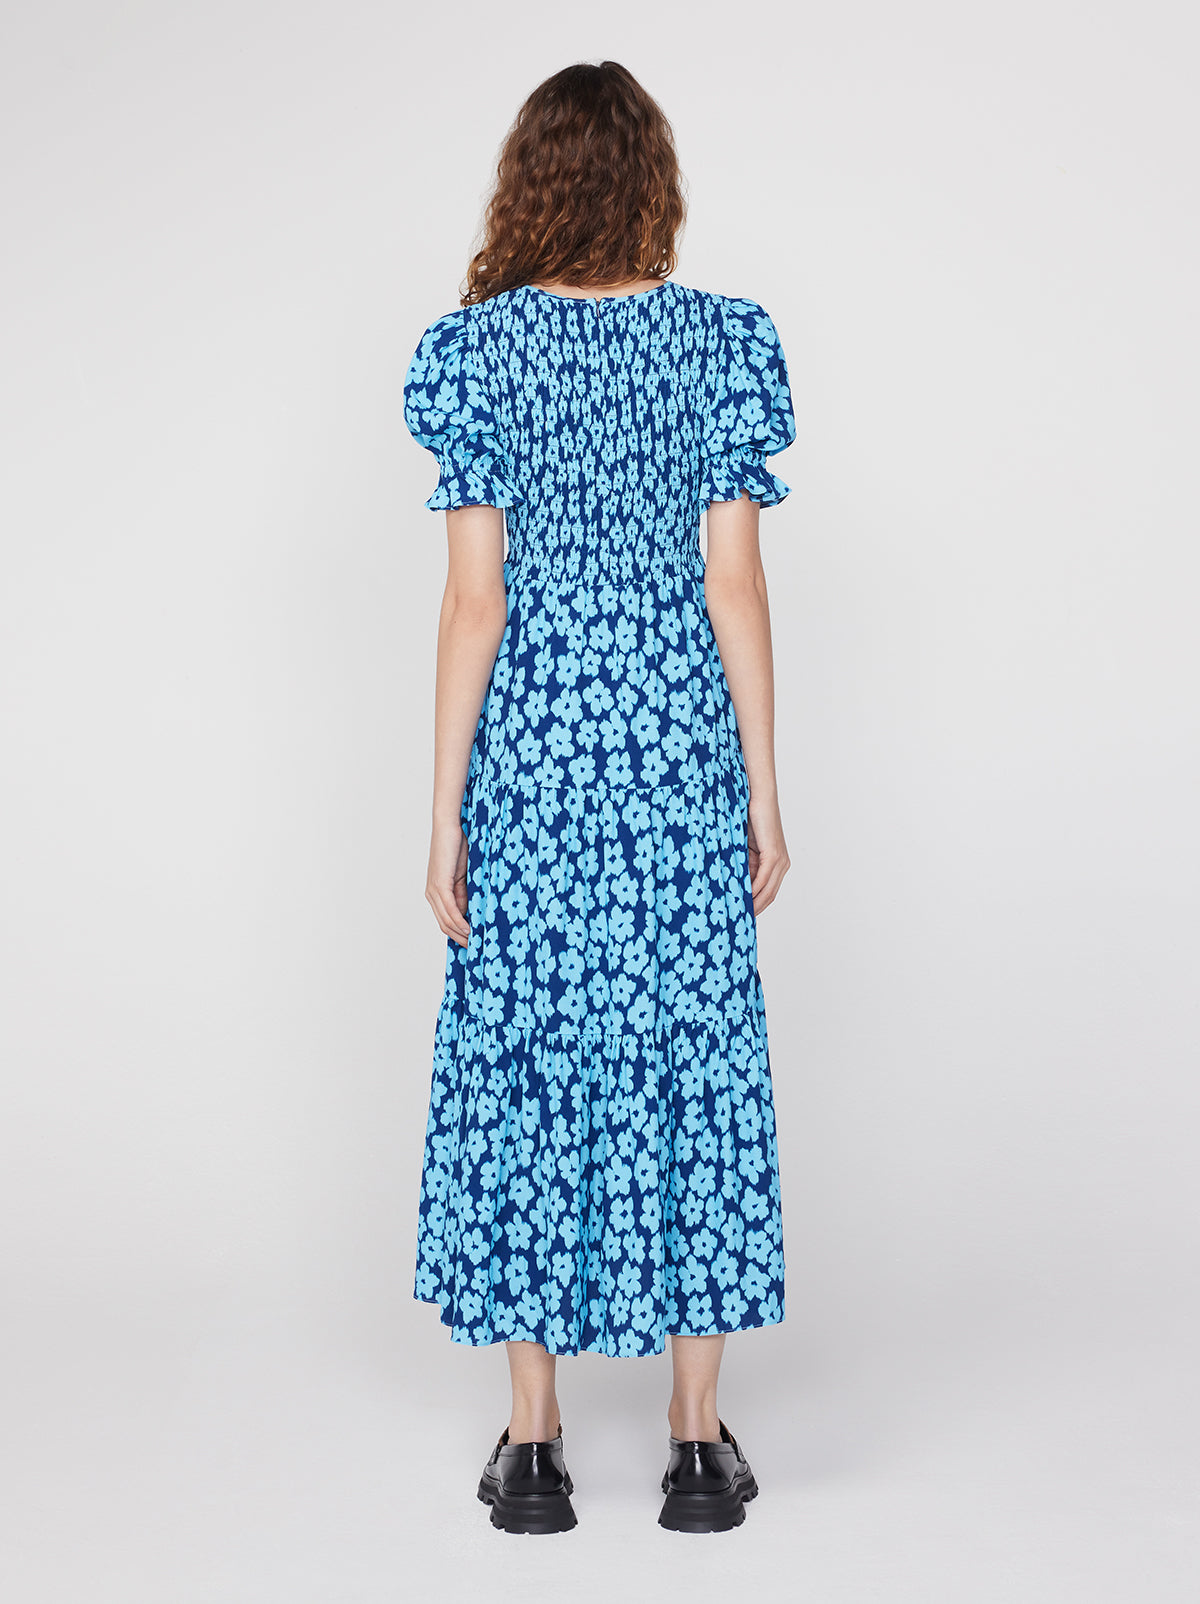 Persephone Blue Blurred Floral Midi Dress By KITRI Studio